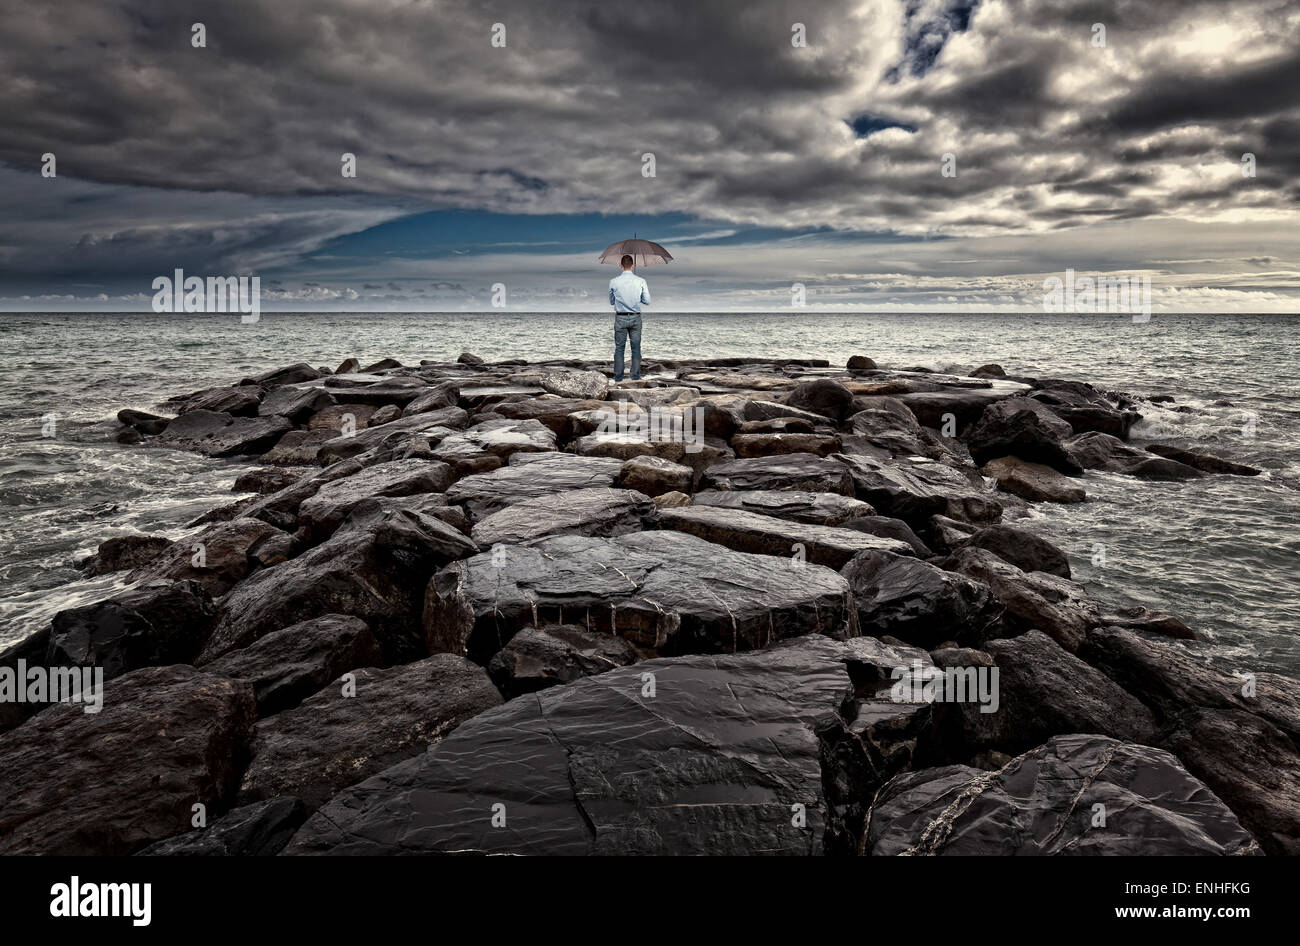 man with umbrella on sea rock bad weather Stock Photo